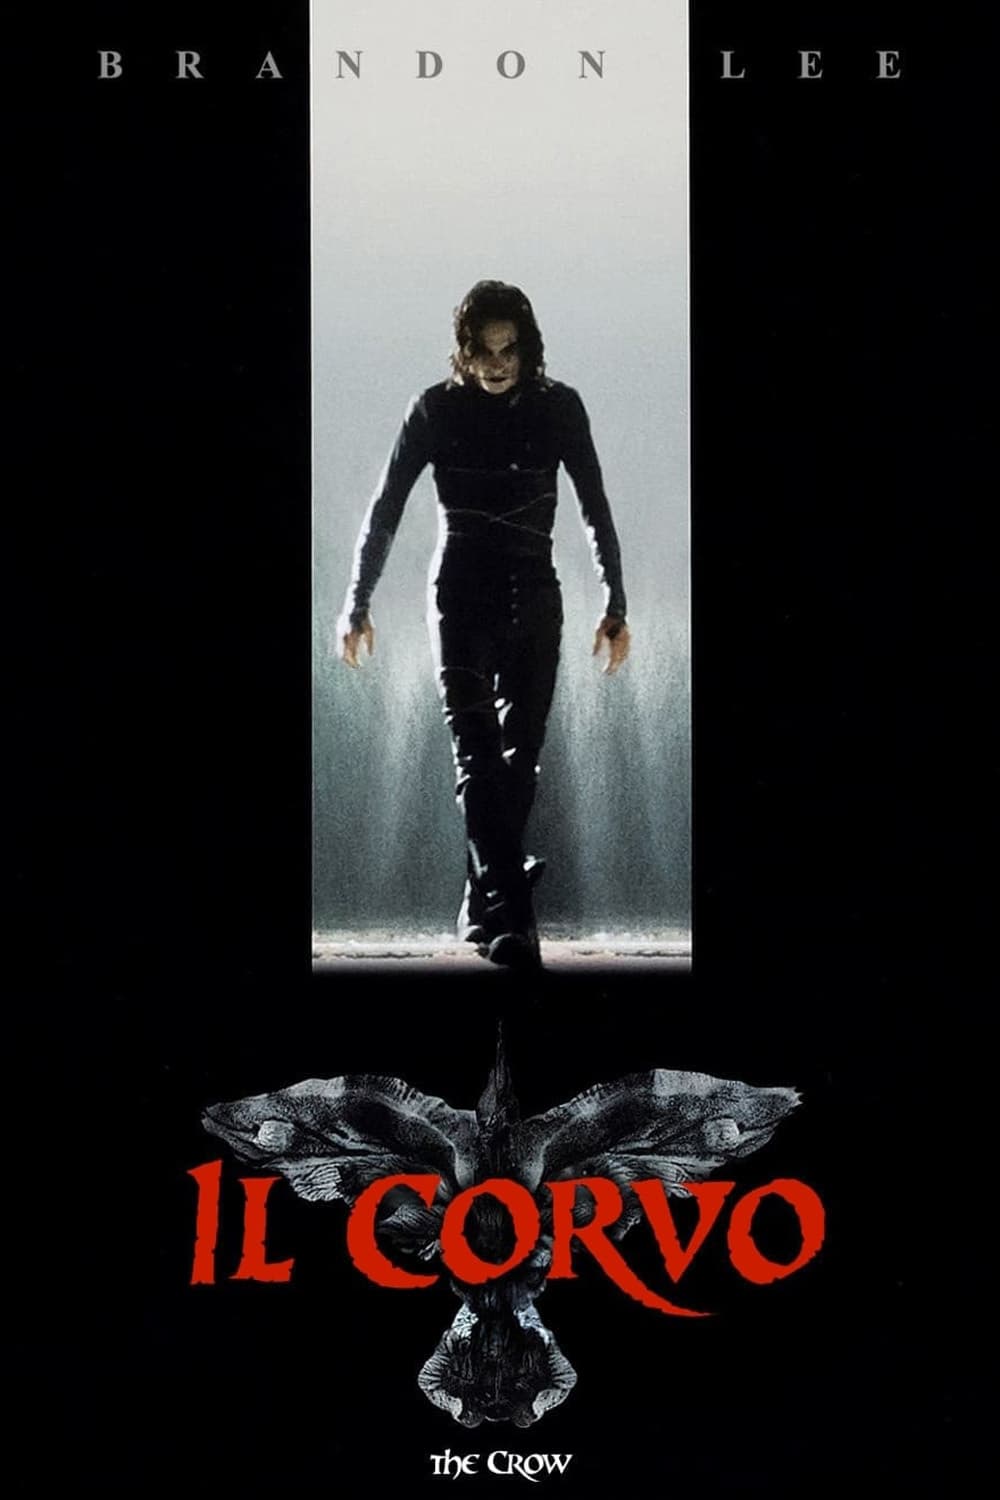 Il corvo - The Crow film